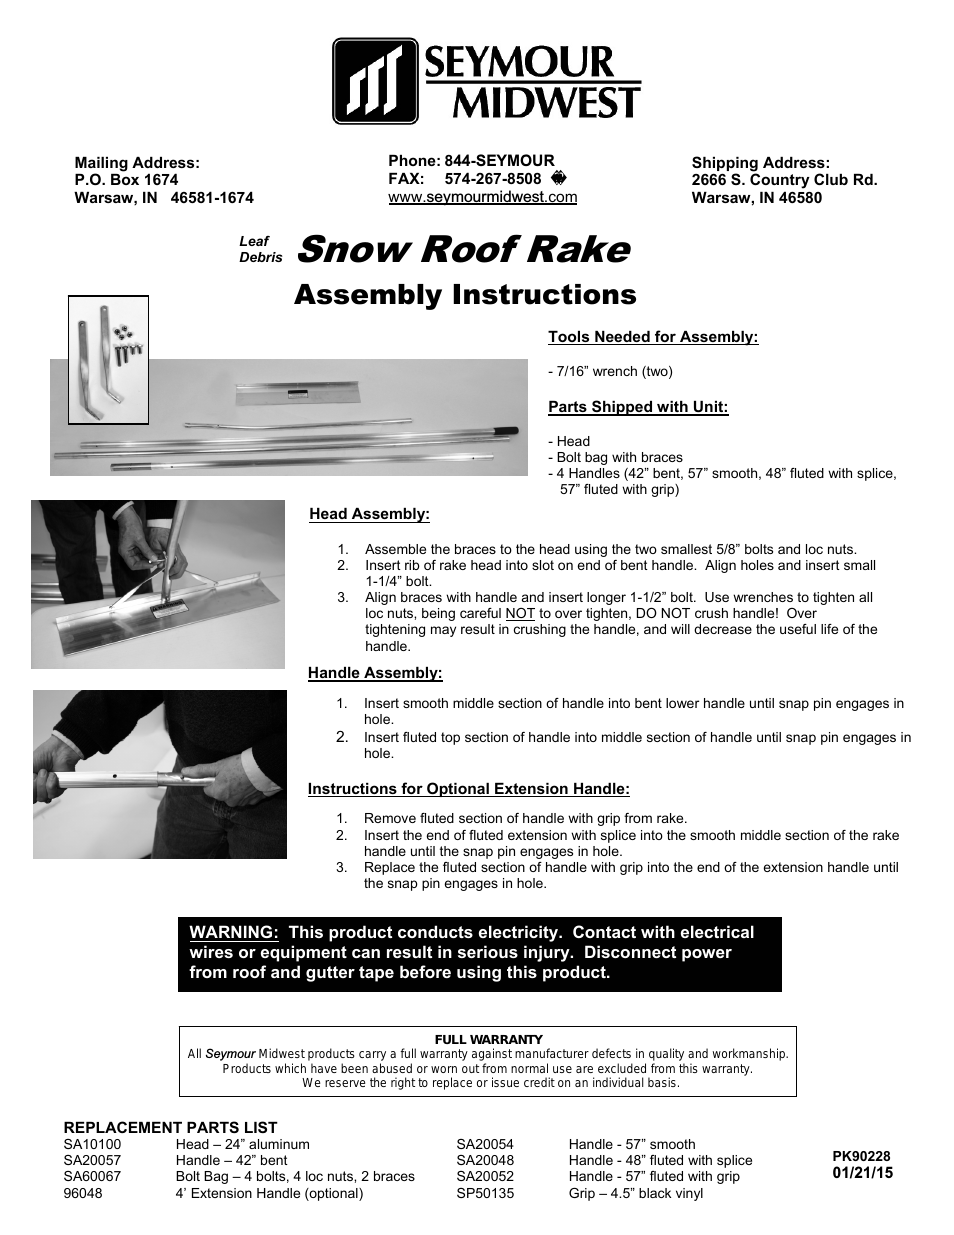 Snow Roof Rake, 4 Handles(PK90228)